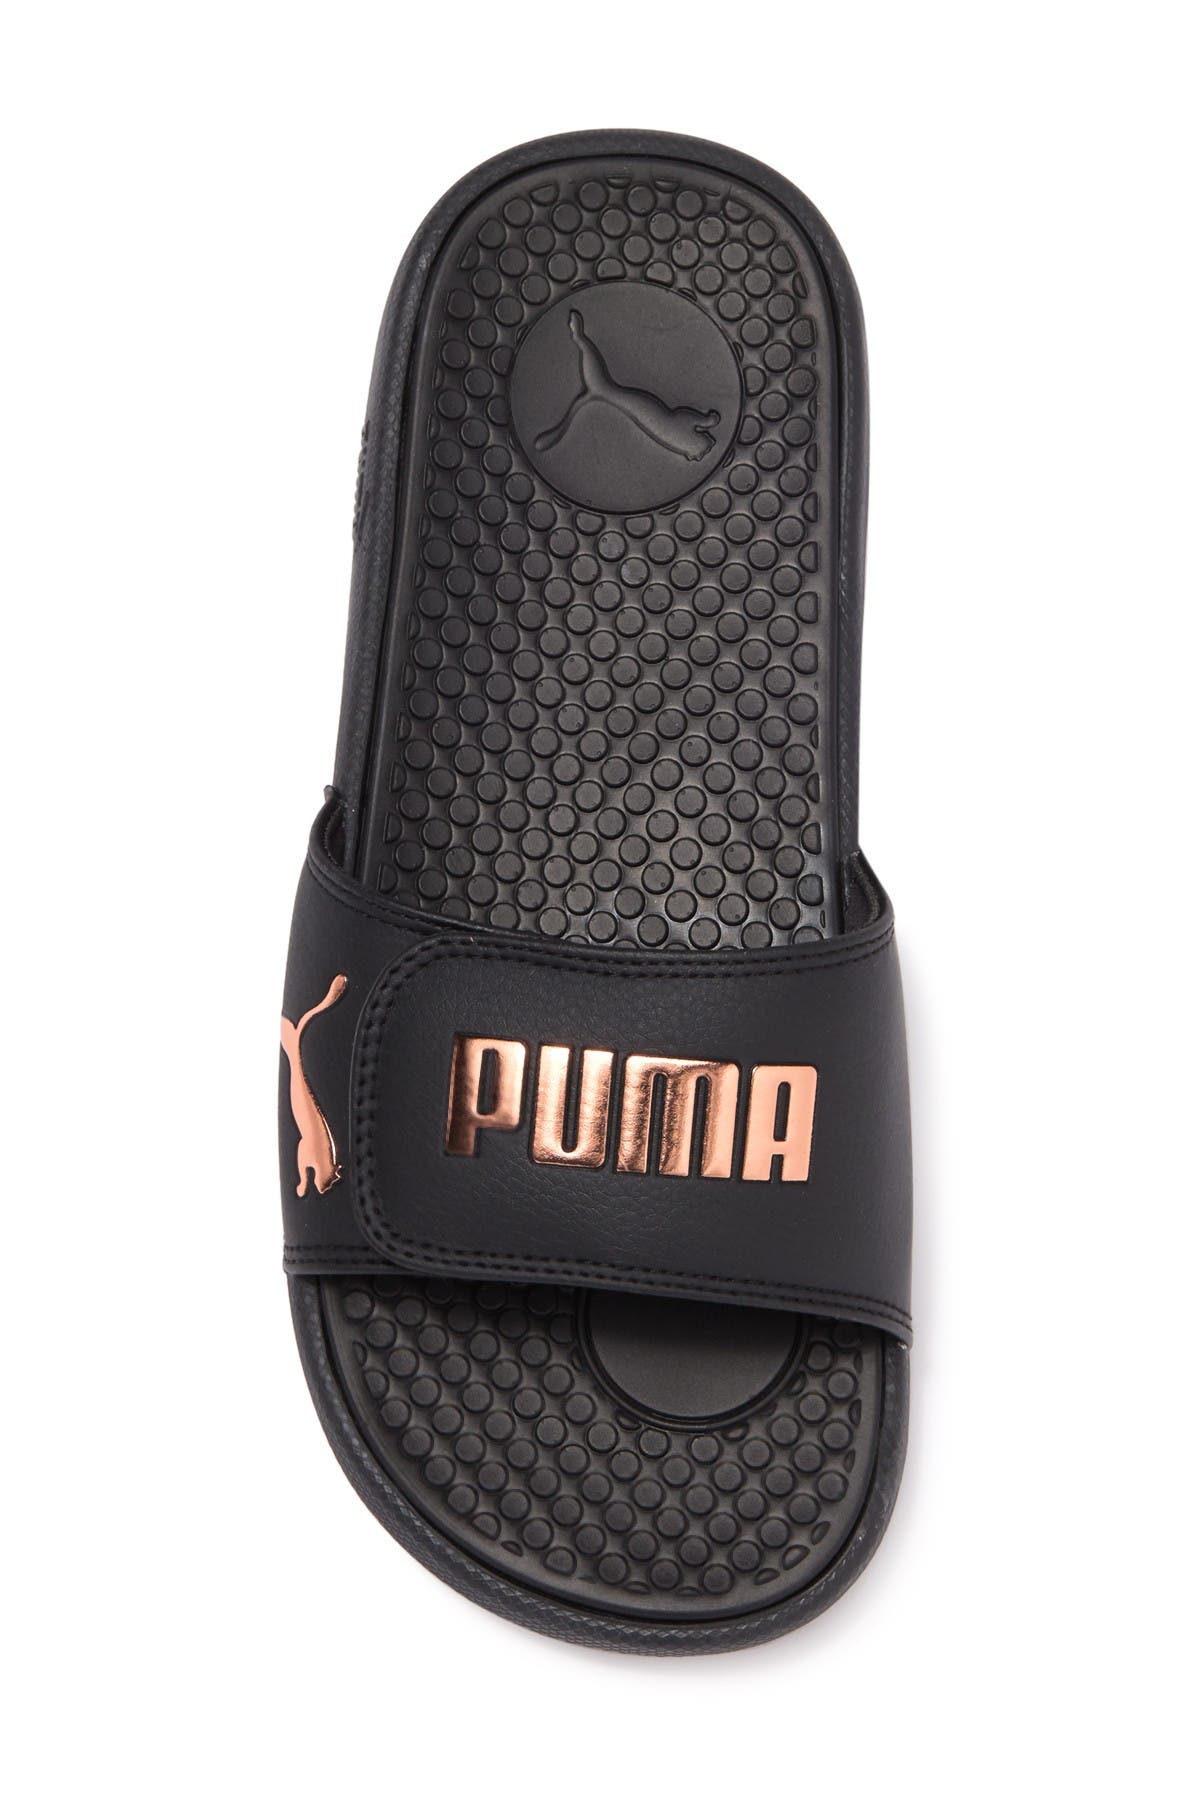 puma slippers below 5